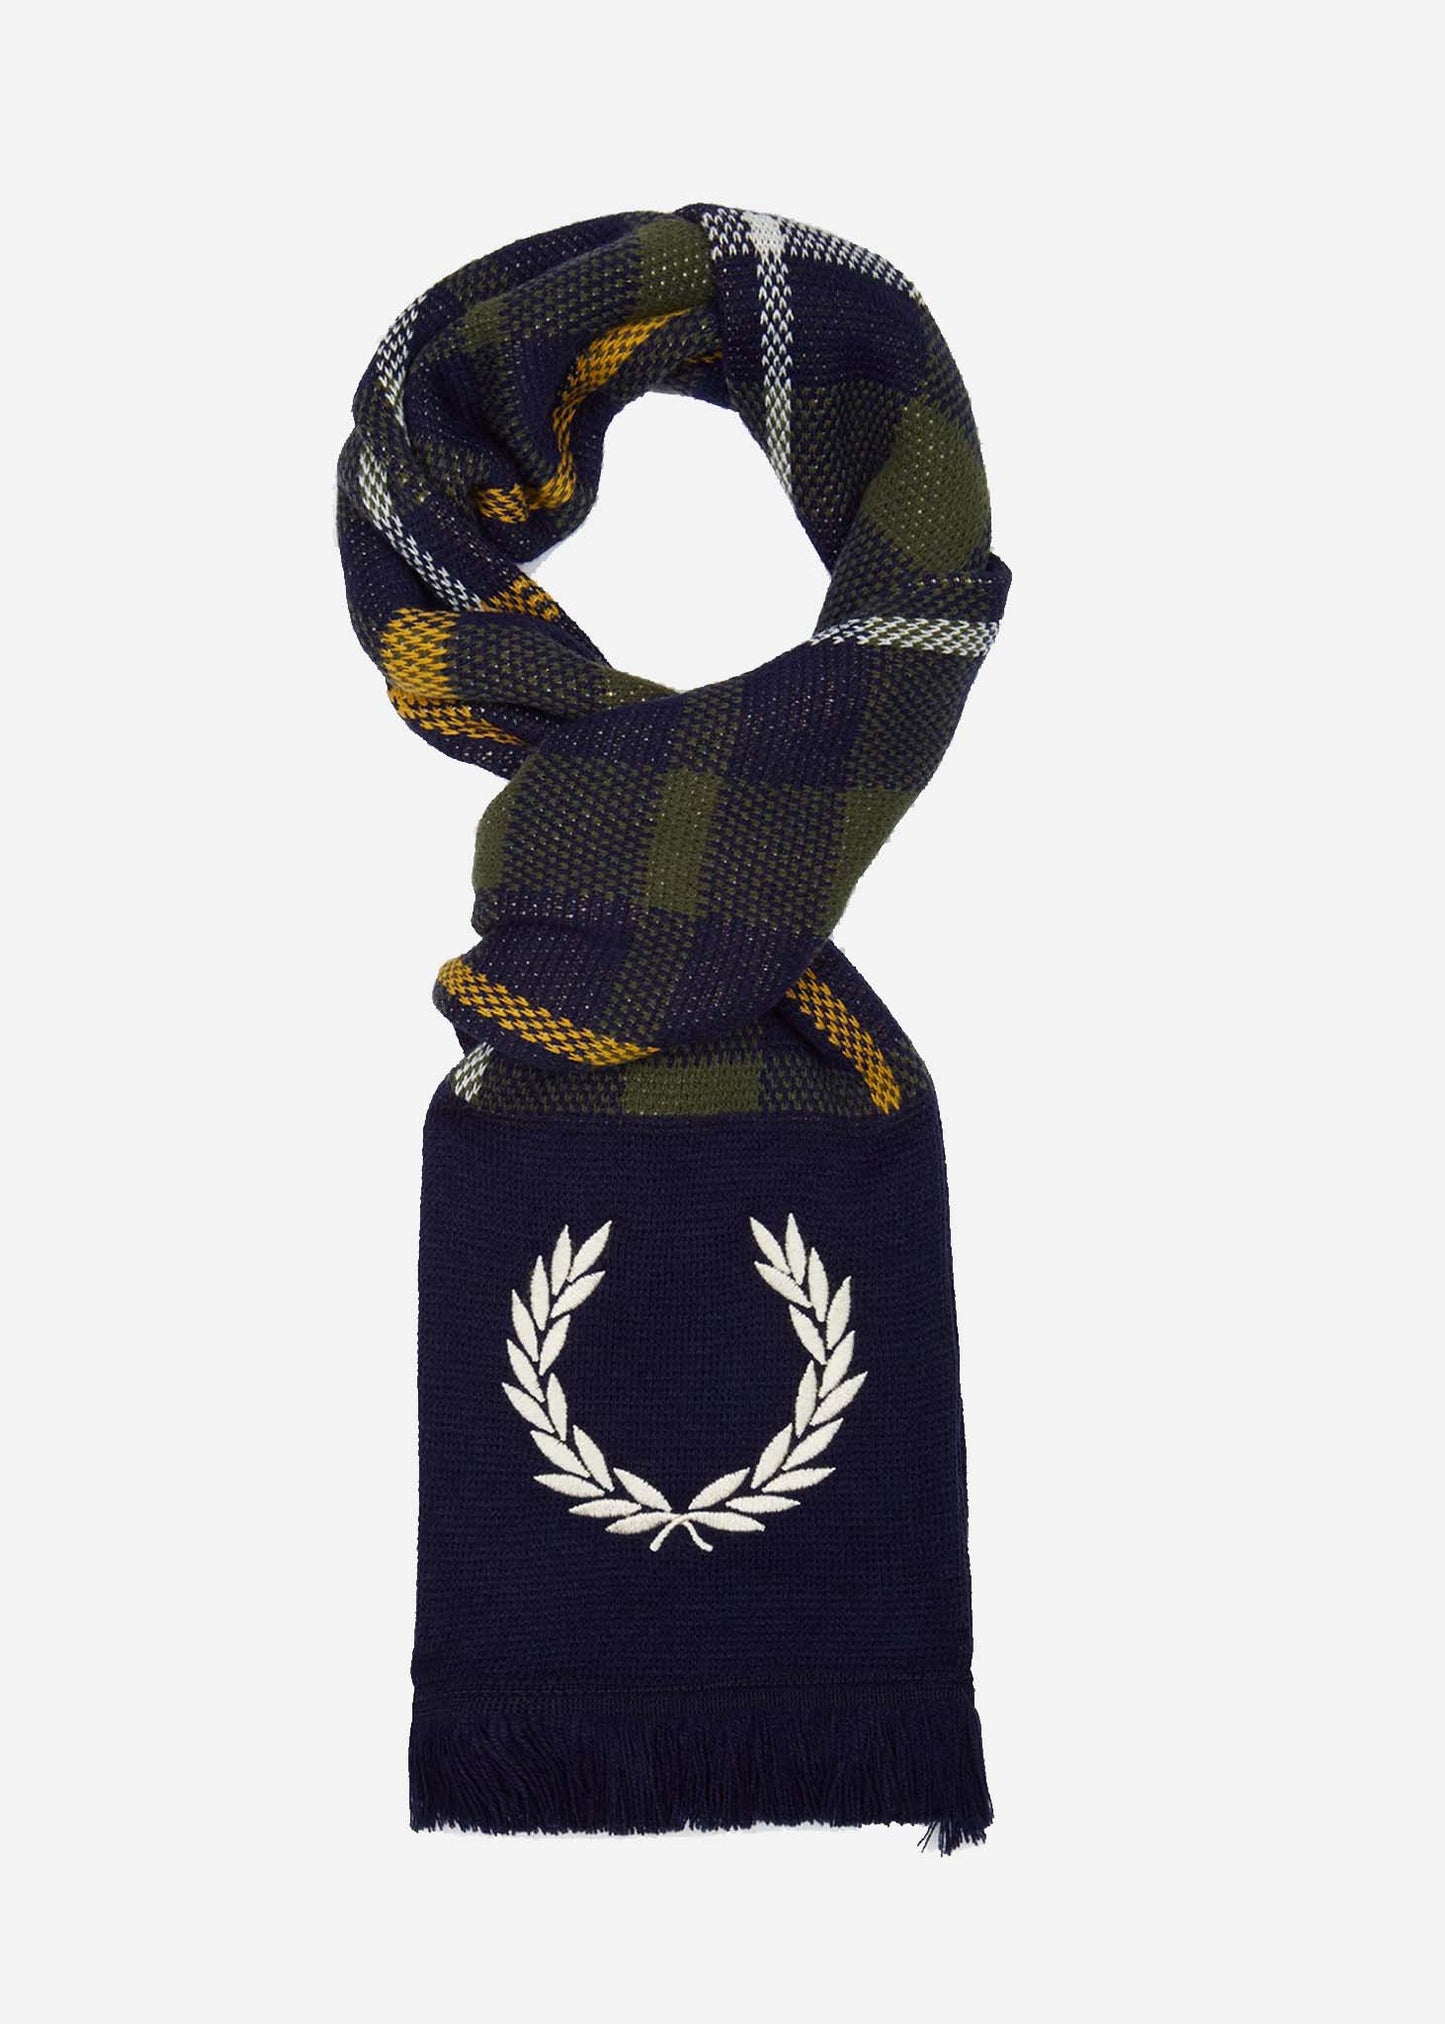 Fred Perry x Nicholas Daley scarf - shaded navy